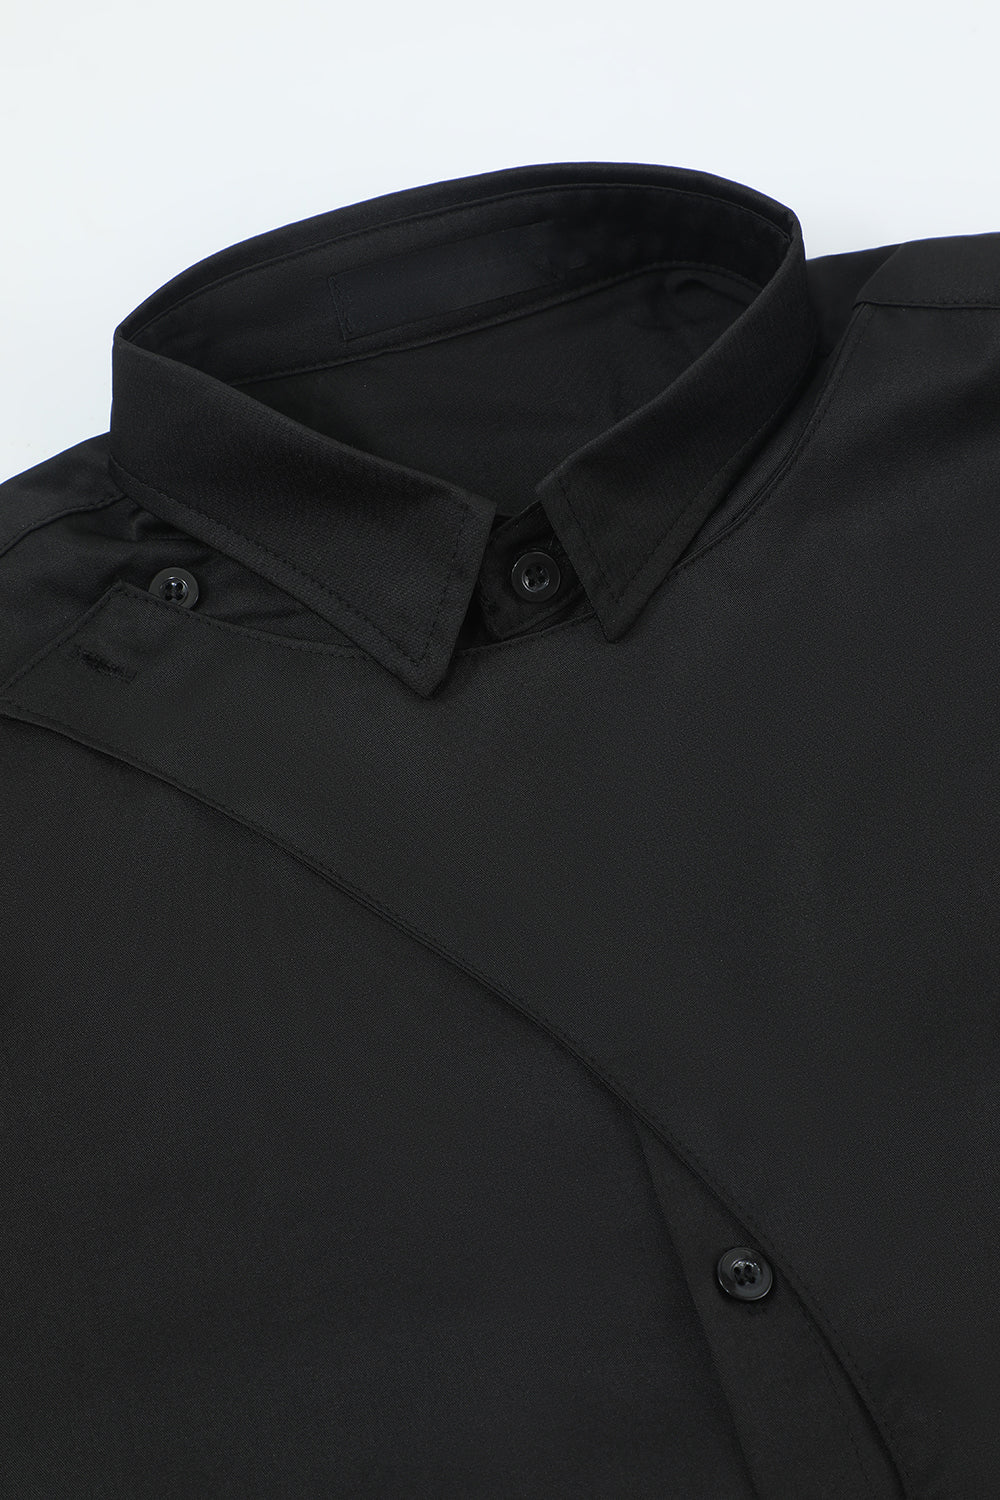 Black Men's Wrinkle-Free Solid Long Sleeves Dress Shirt